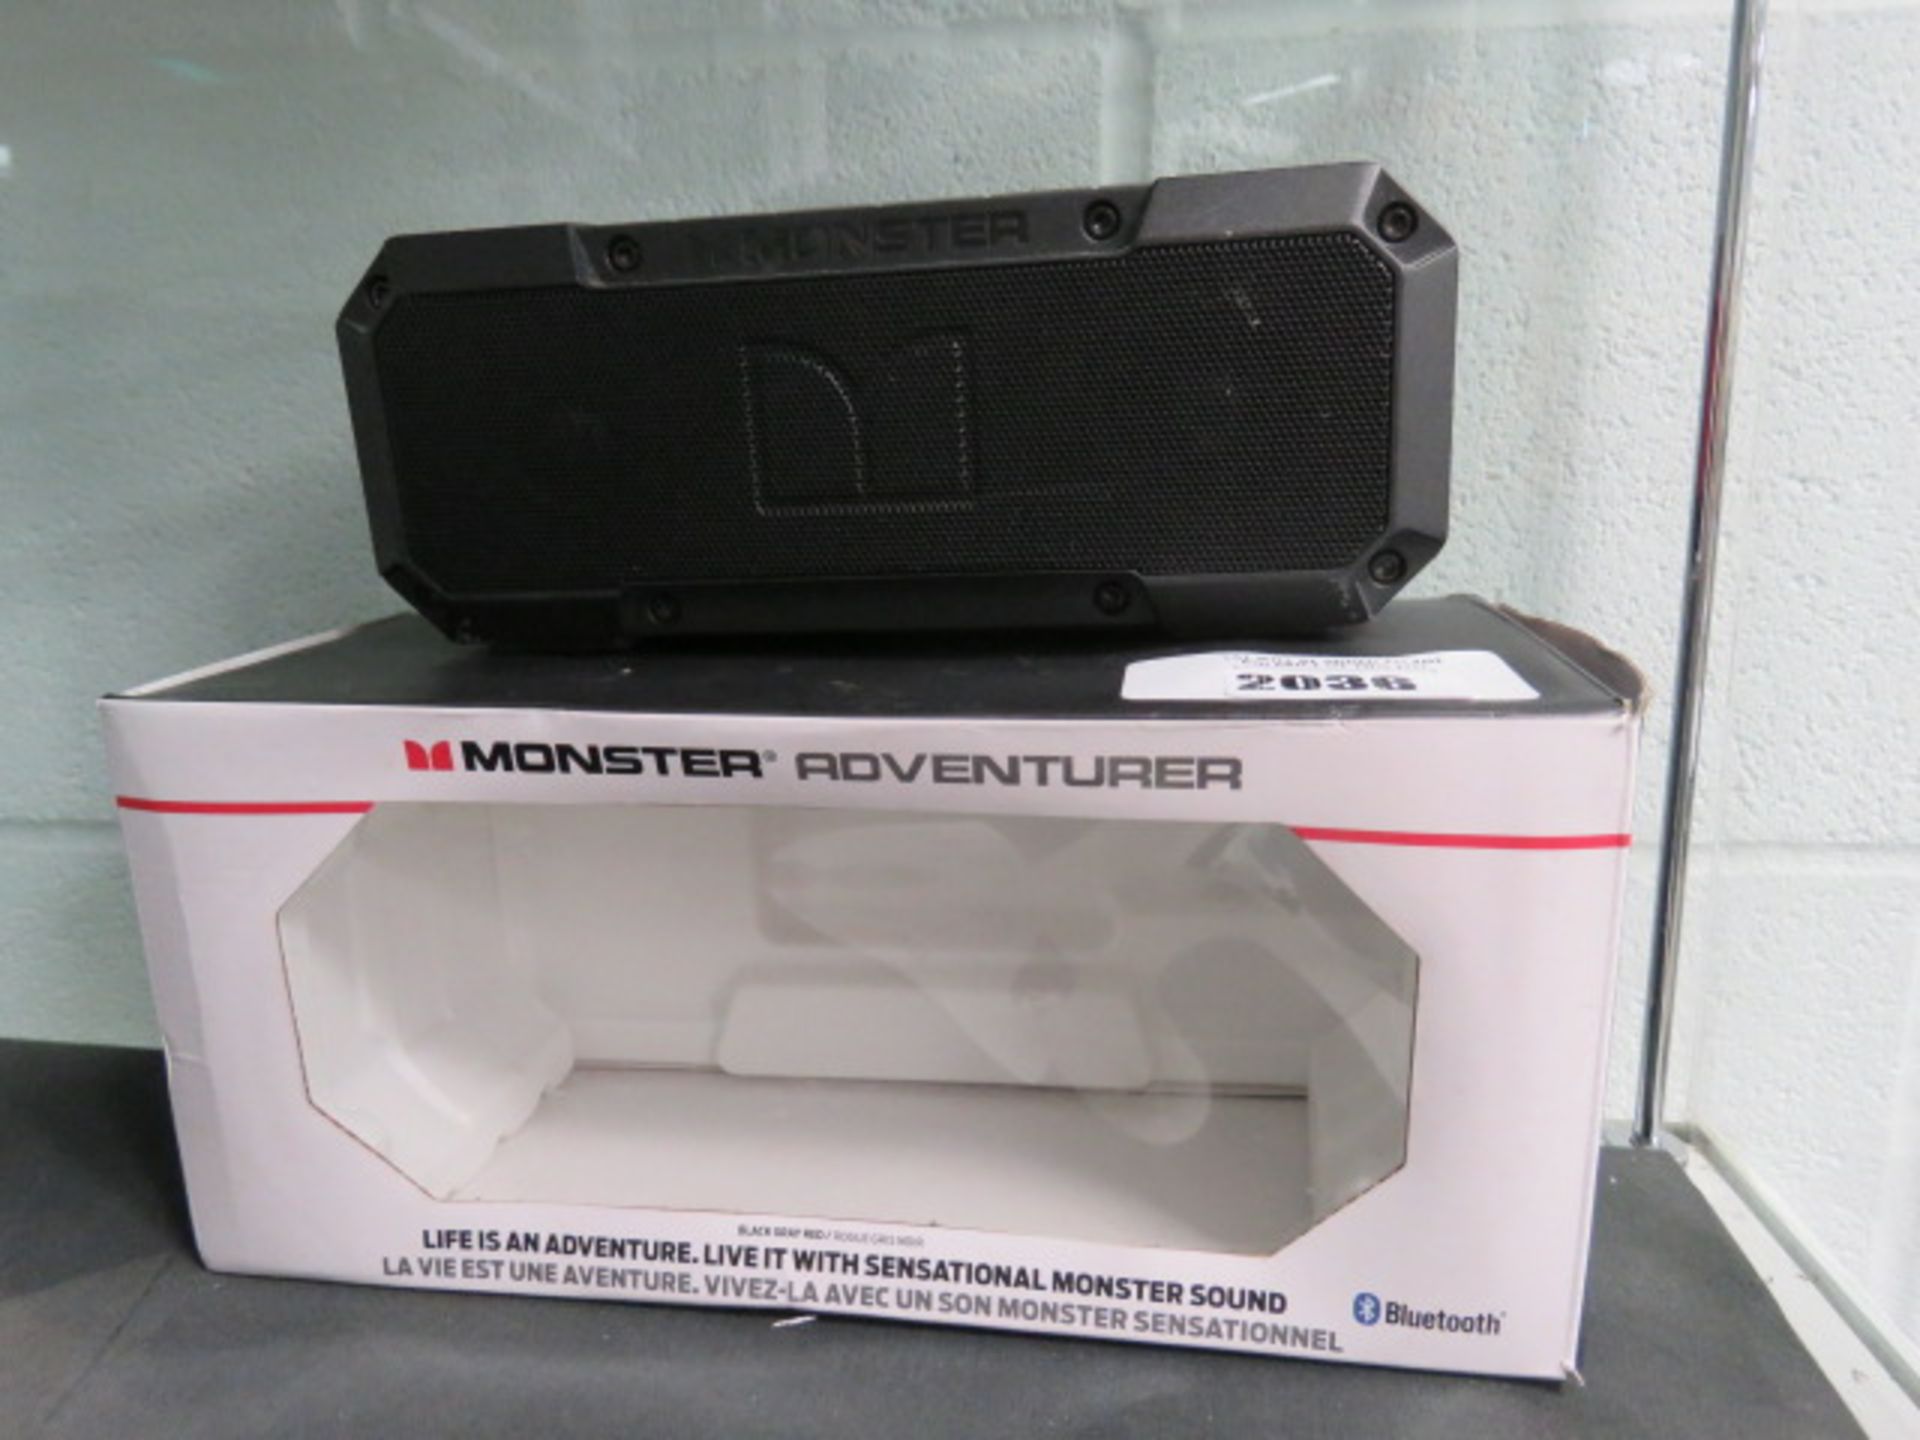 Monster Adventurer portable bluetooth speaker with box